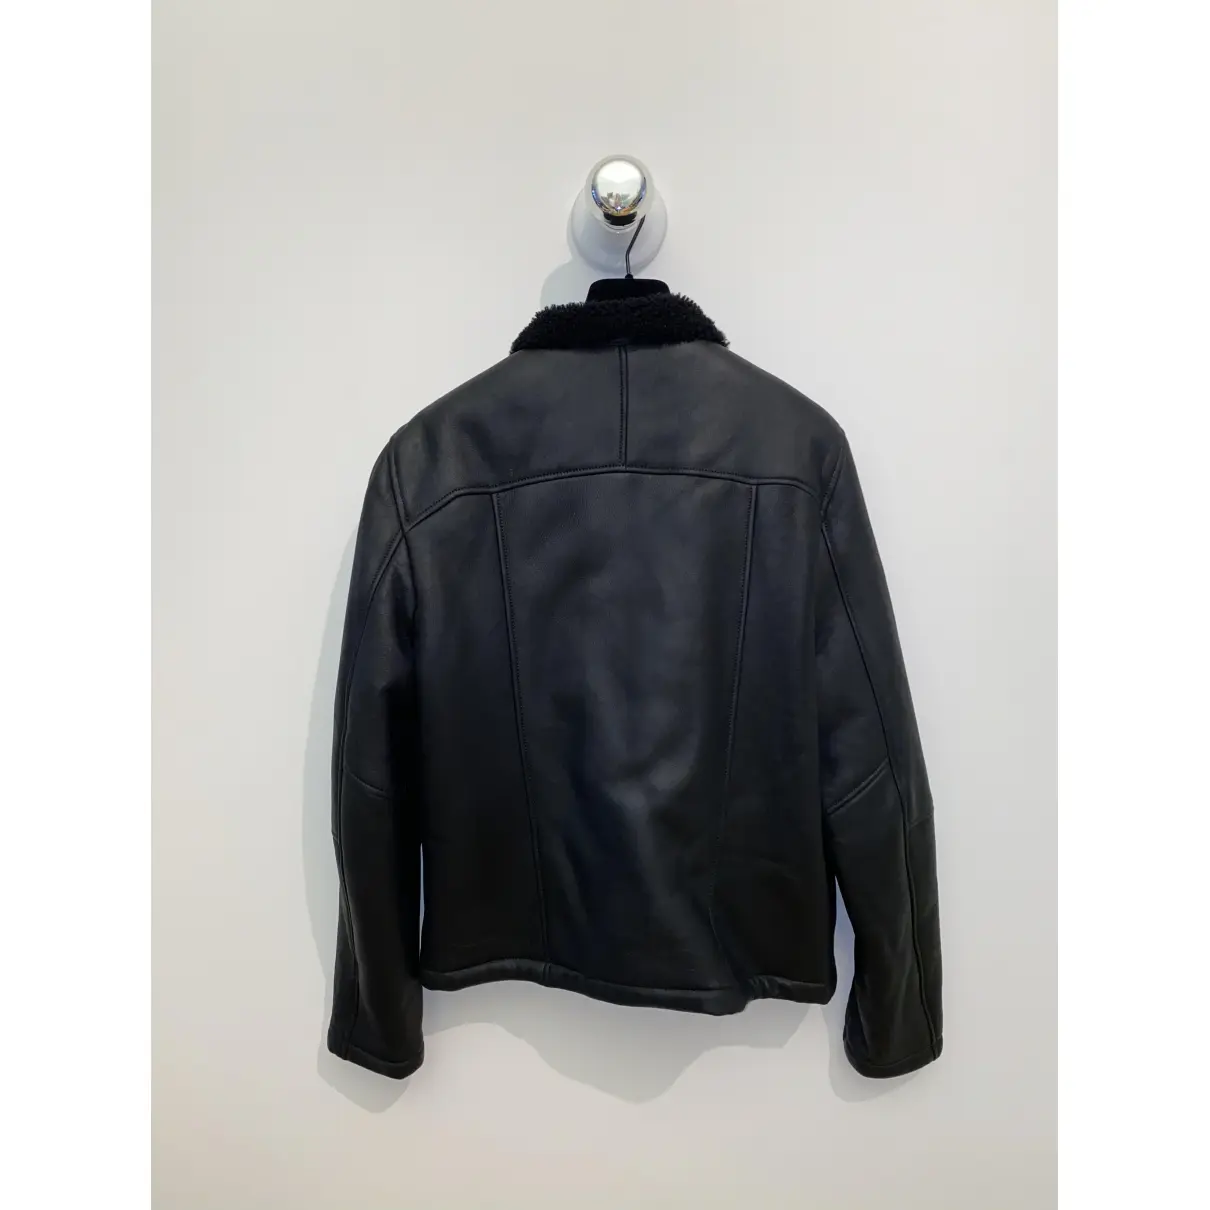 Buy Karl Lagerfeld Shearling jacket online